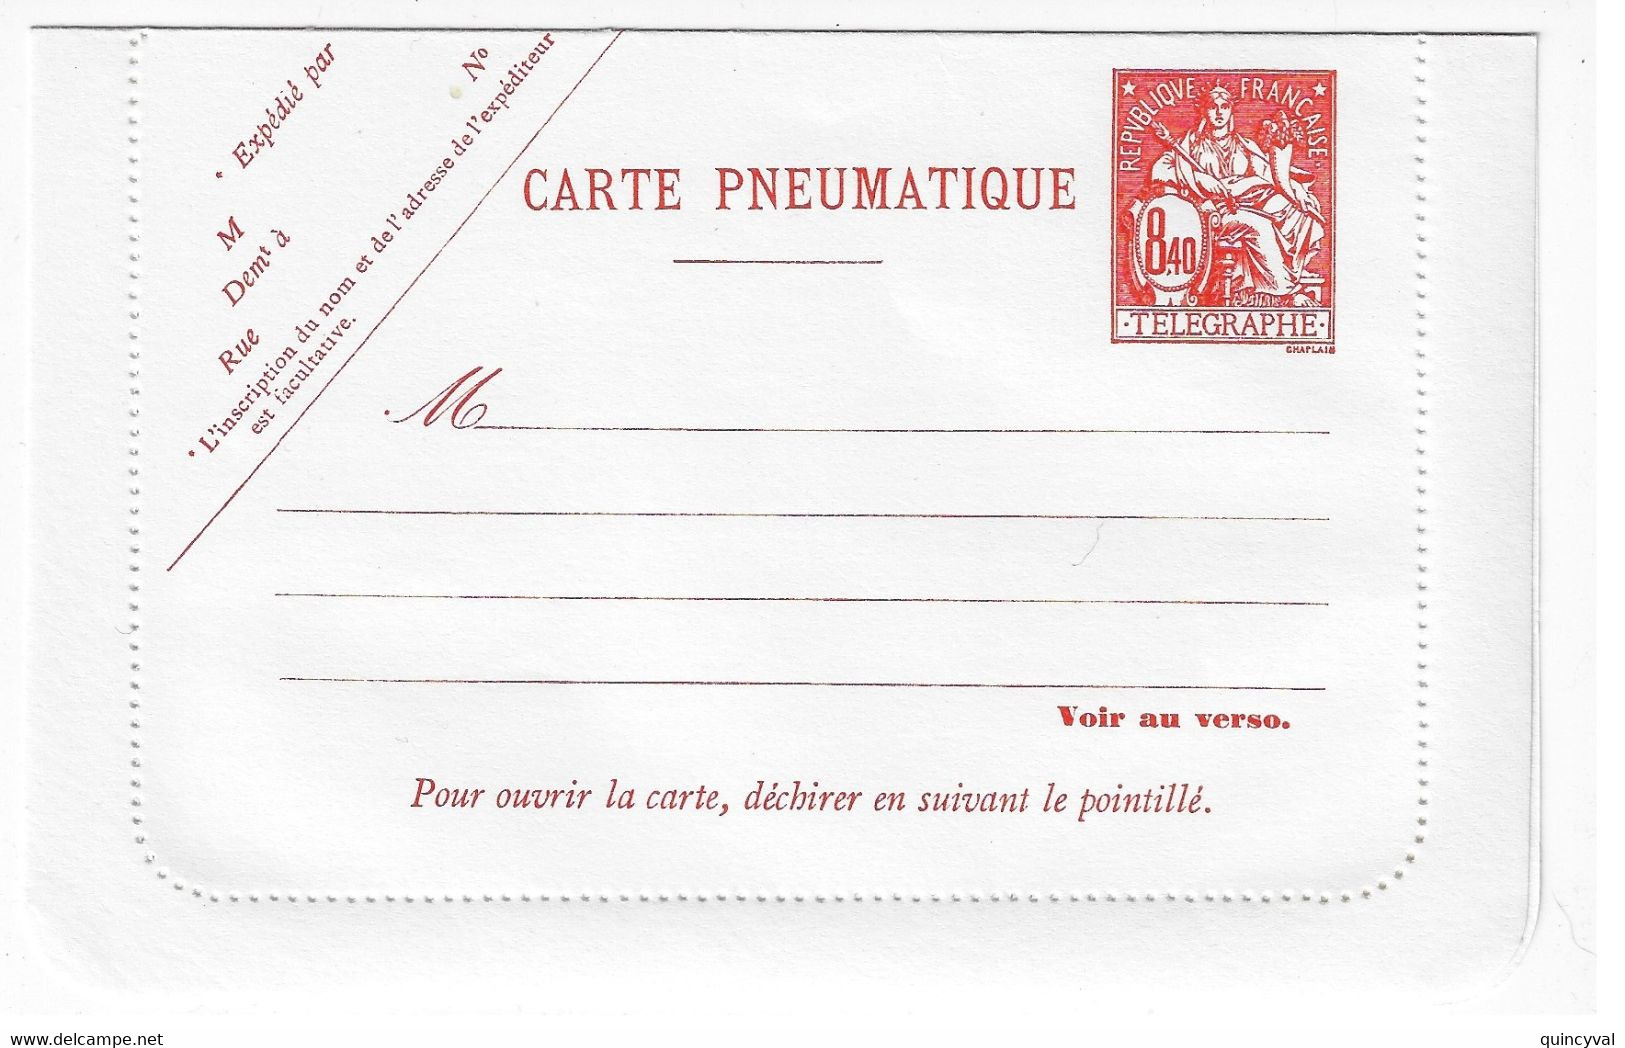 8,40 F Chaplain Carte-lettre Yv 2623 Storch V16 - Pneumatic Post